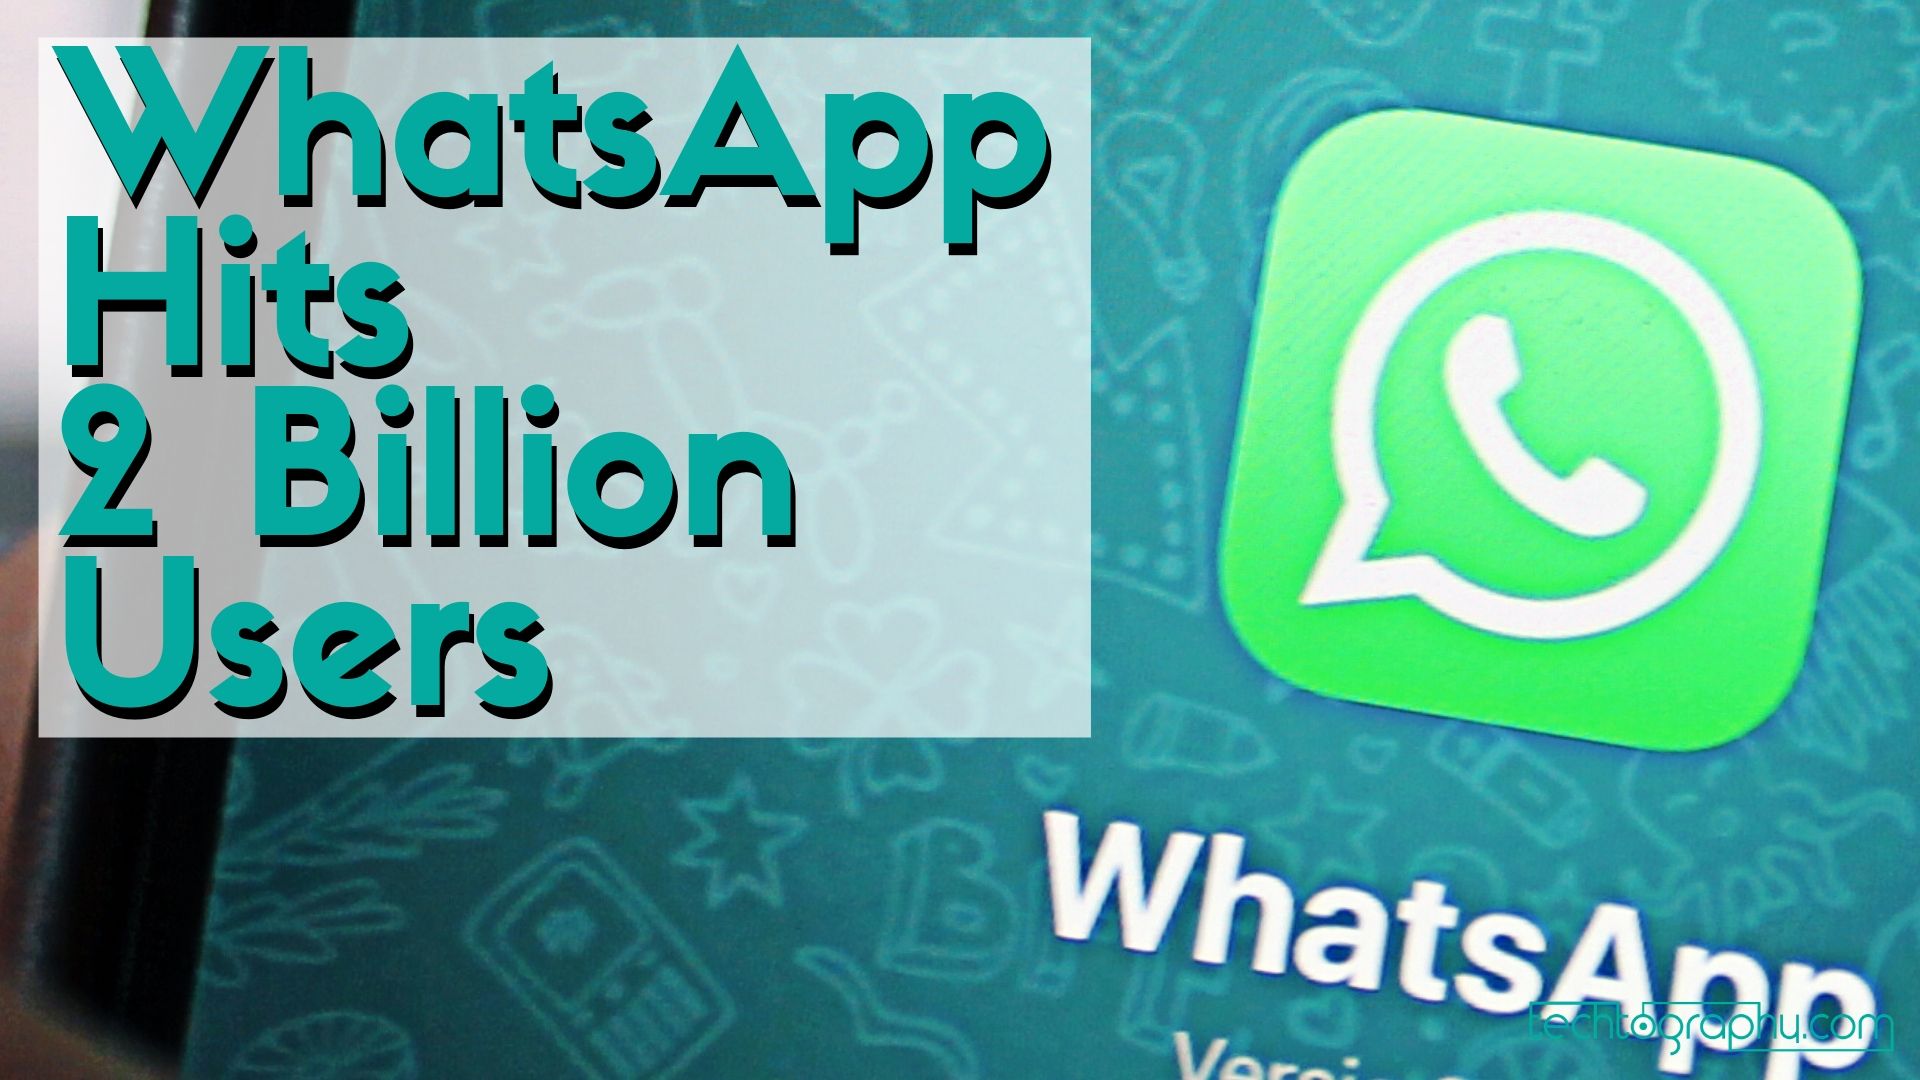 WhatsApp Hits 2 Billion Users